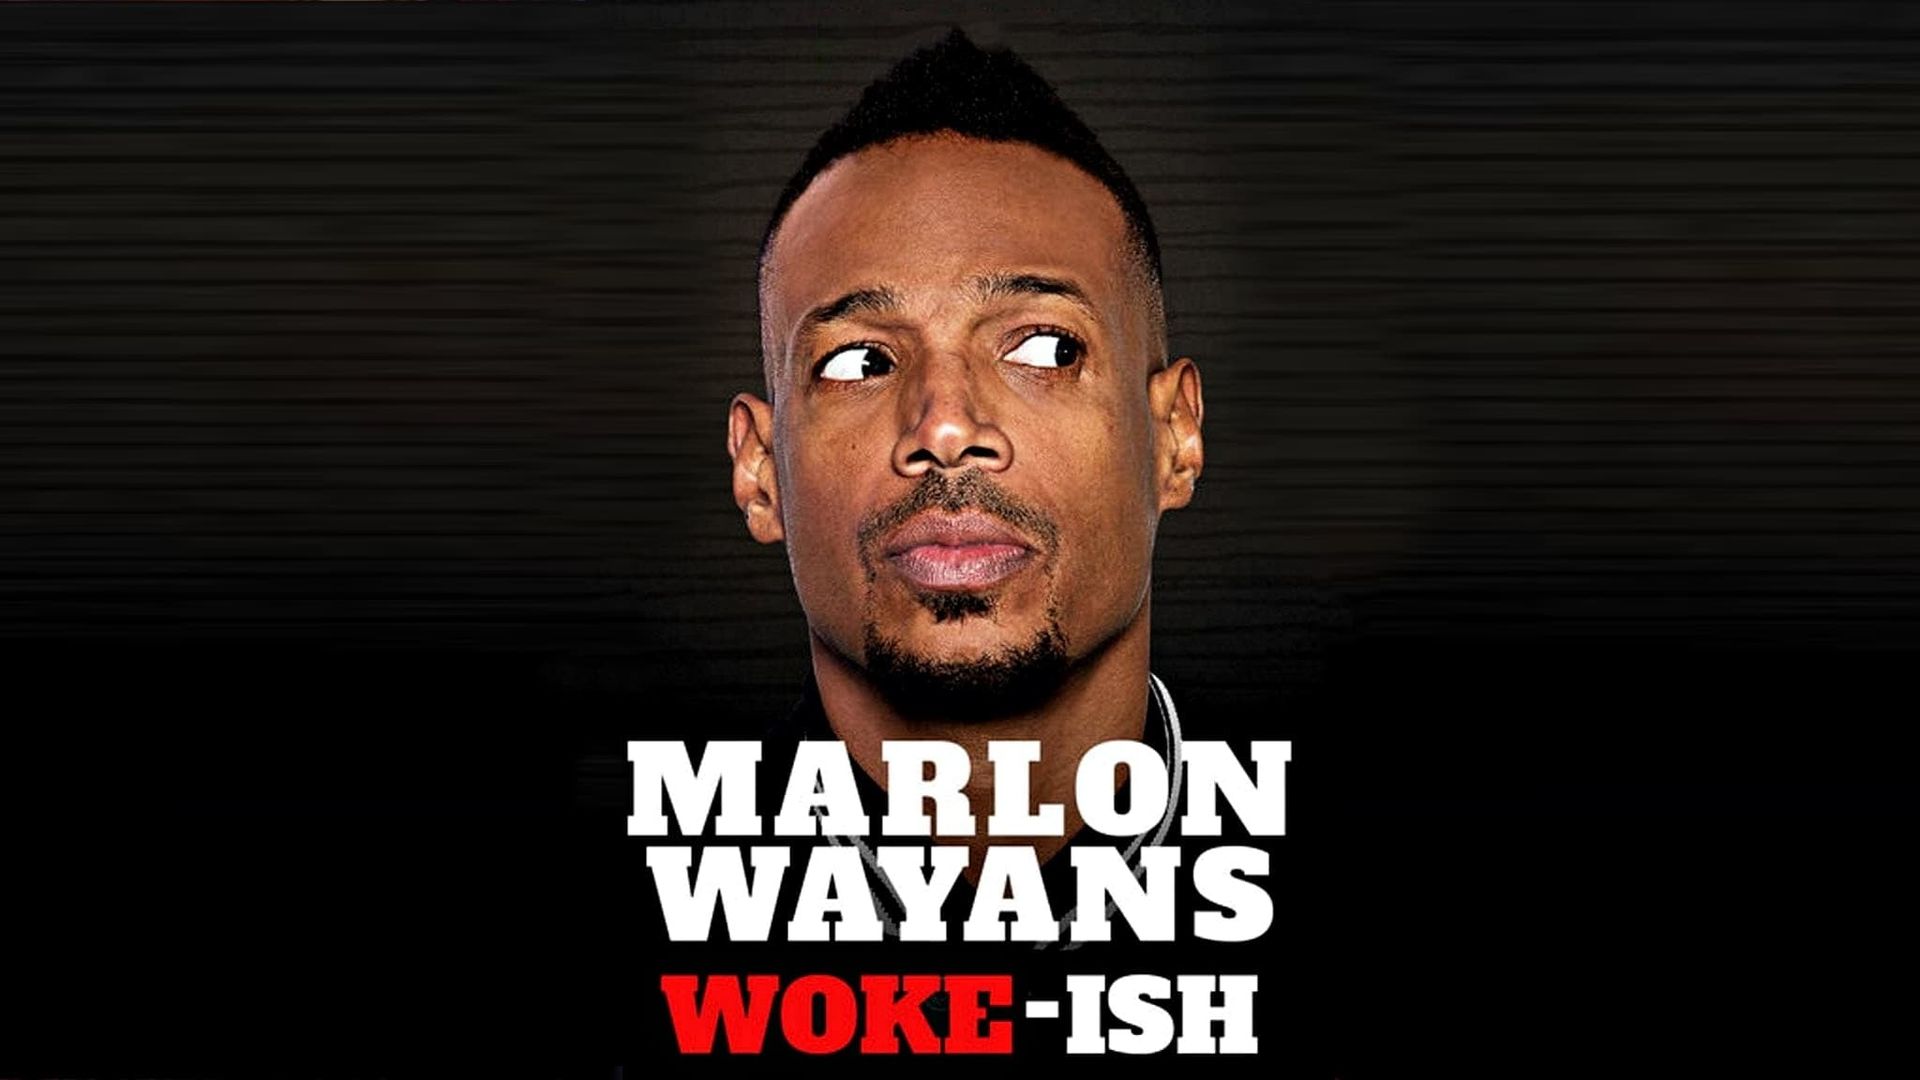 Marlon Wayans: Woke-ish background